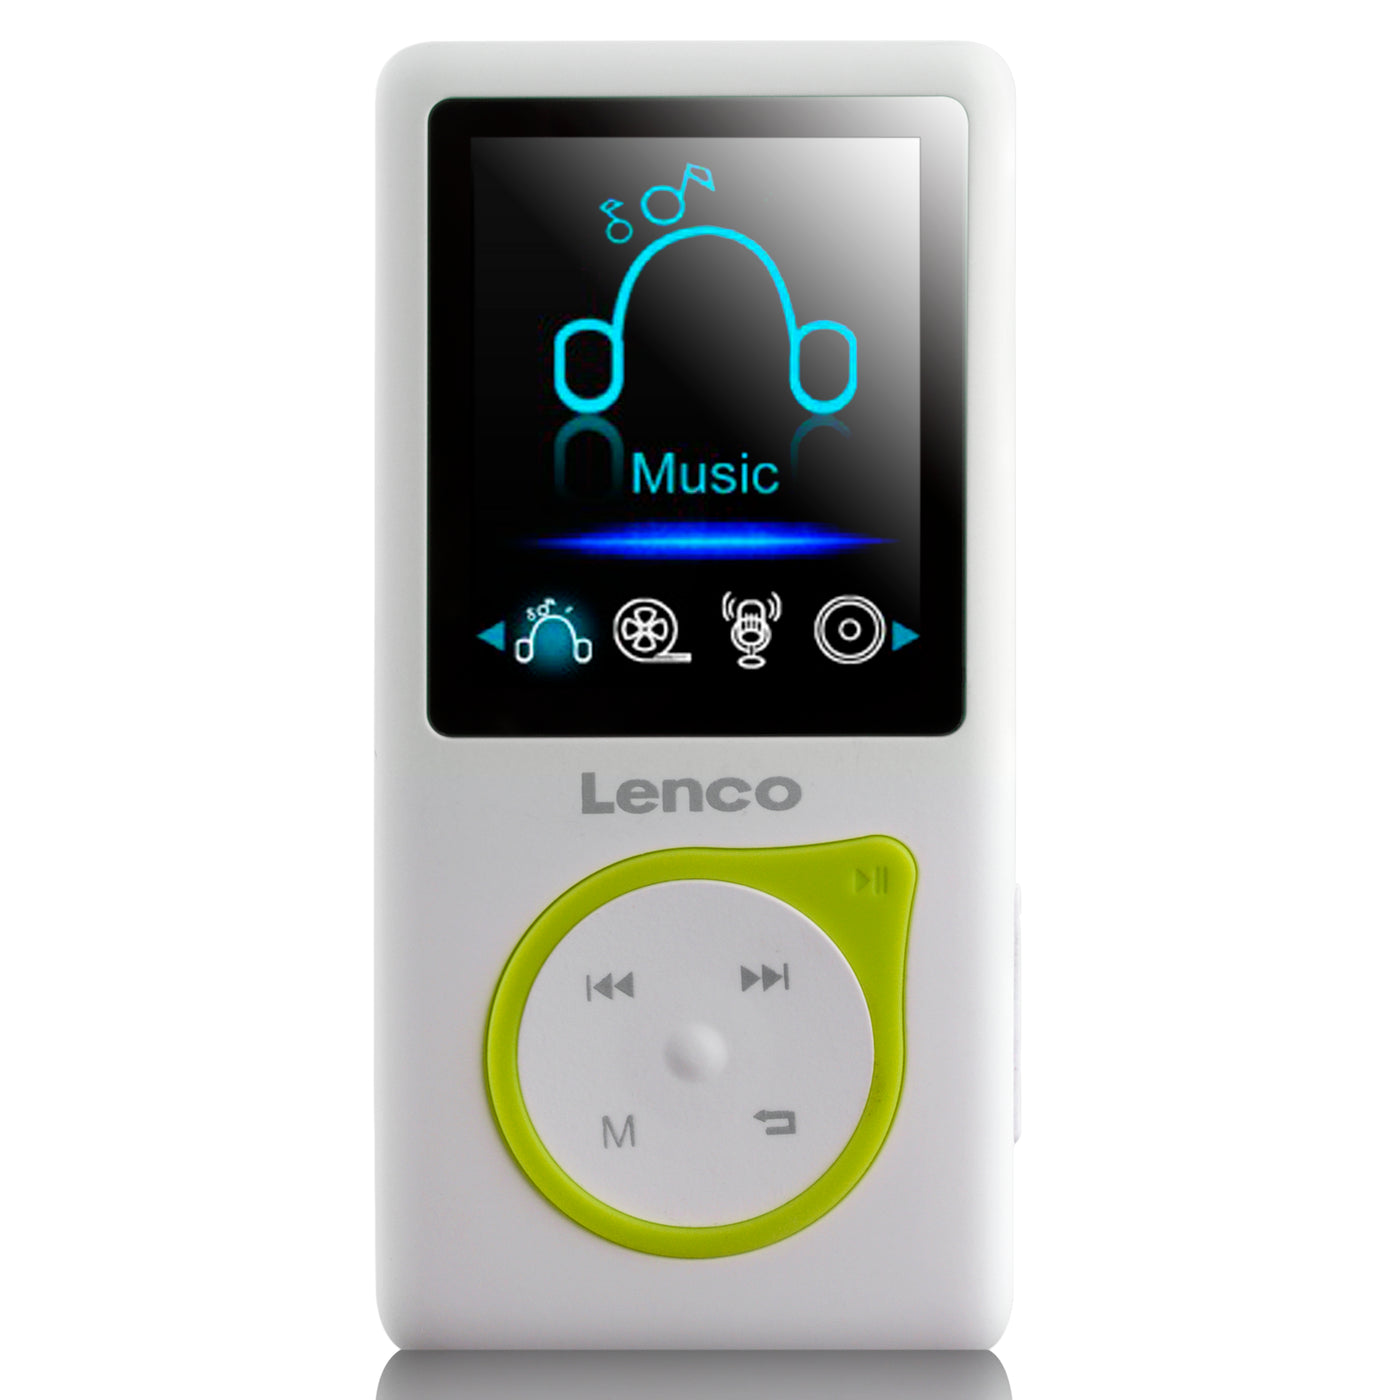 LENCO Xemio-668 Lime - MP3/MP4 player Incl. 8GB micro SD card - Lime